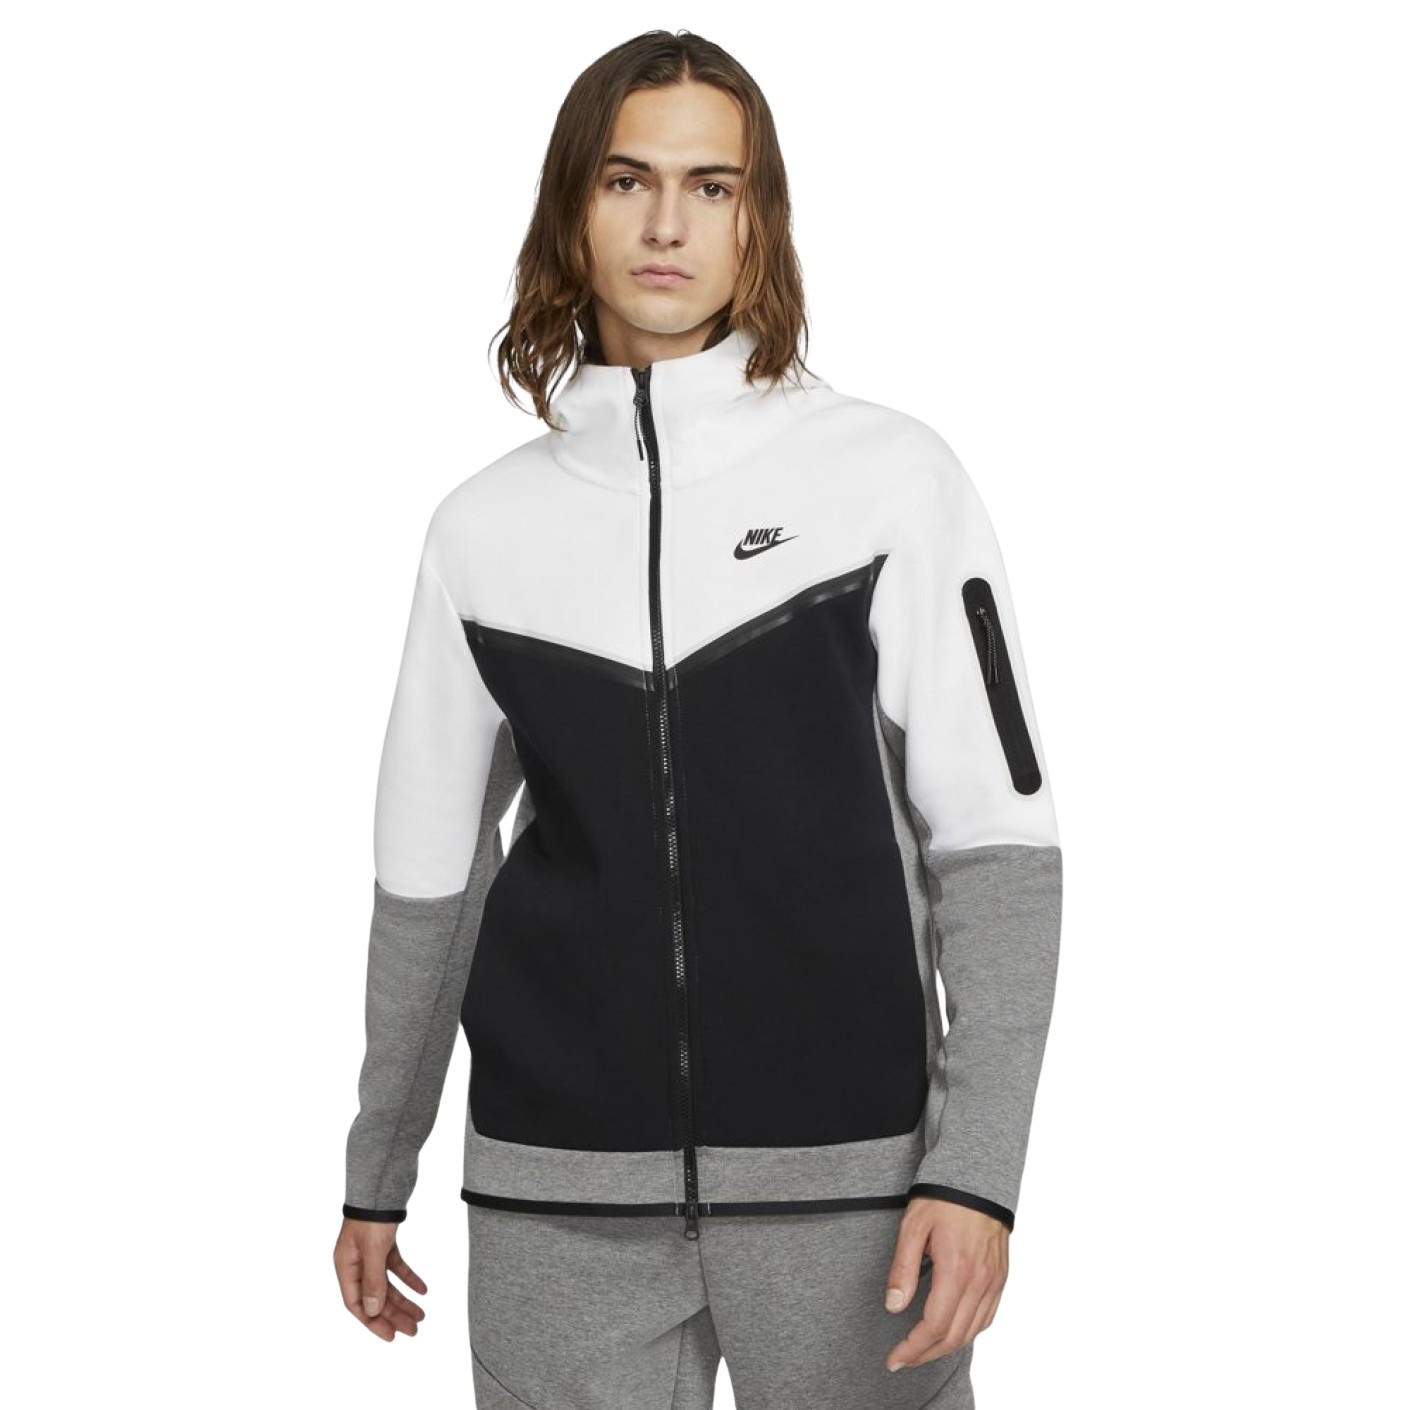 Gilet Nike Tech Fleece blanc noir gris - Voetbalshop.be